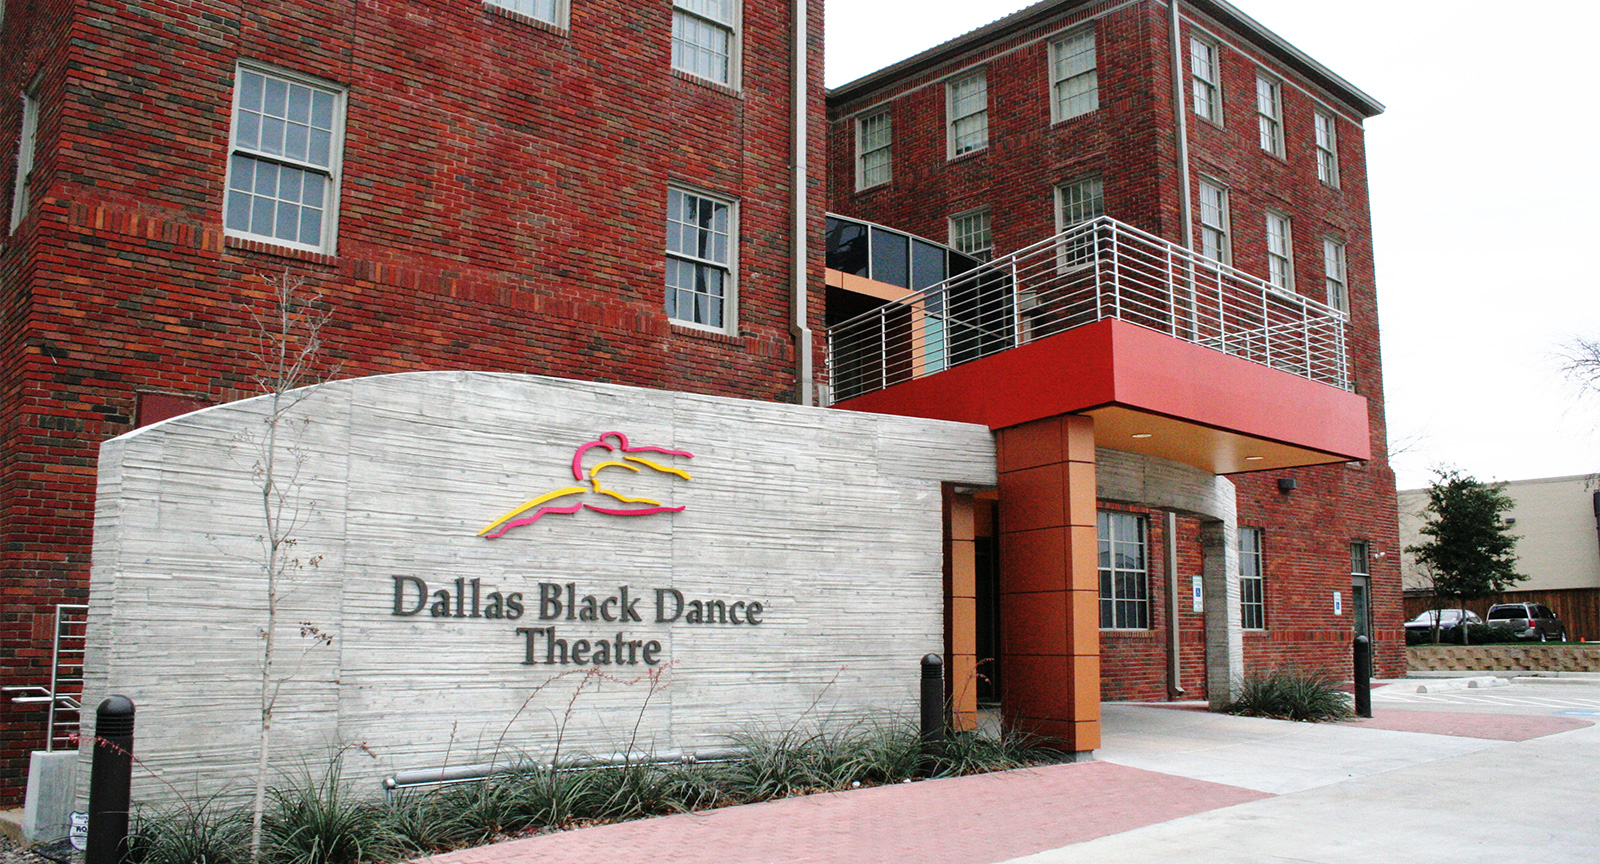 Dallas Black Dance Theater: Behind the Scenes